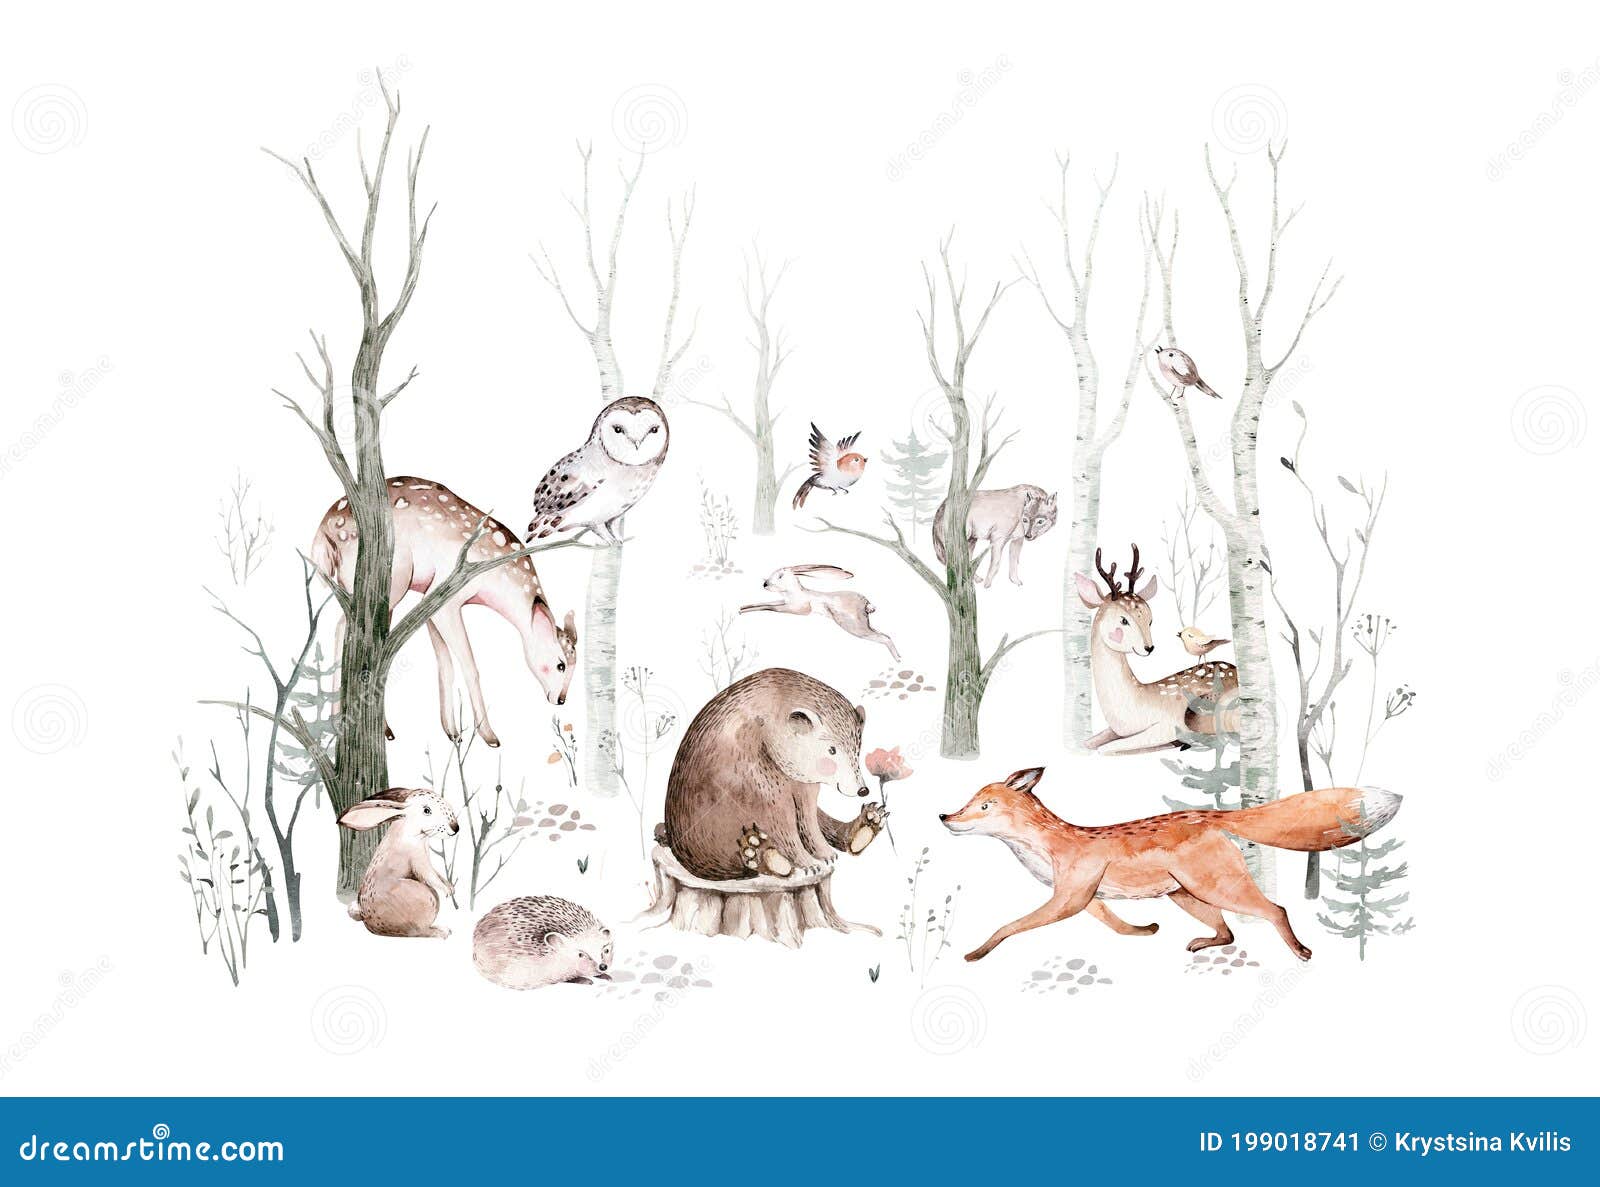 Woodland Animals Printable Valentines for Students - Fox, Rabbit, Hedgehog,  and Chipmunk